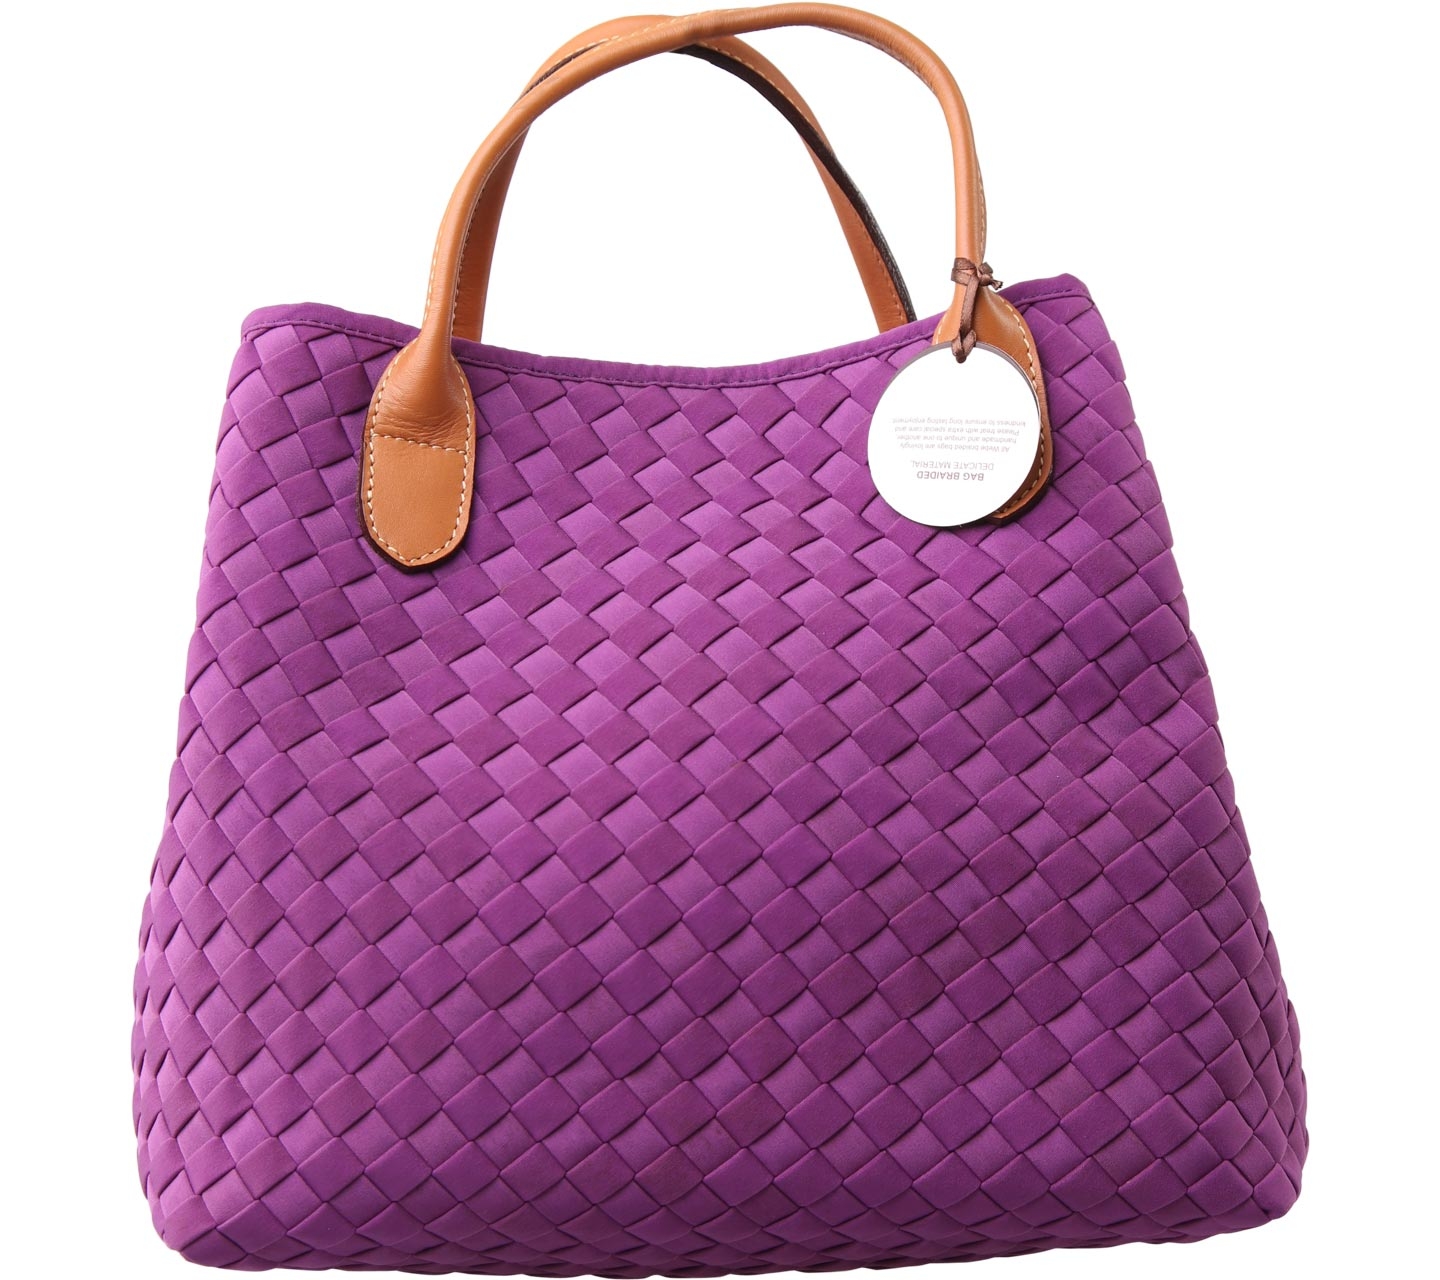 Webe Purple Handbag